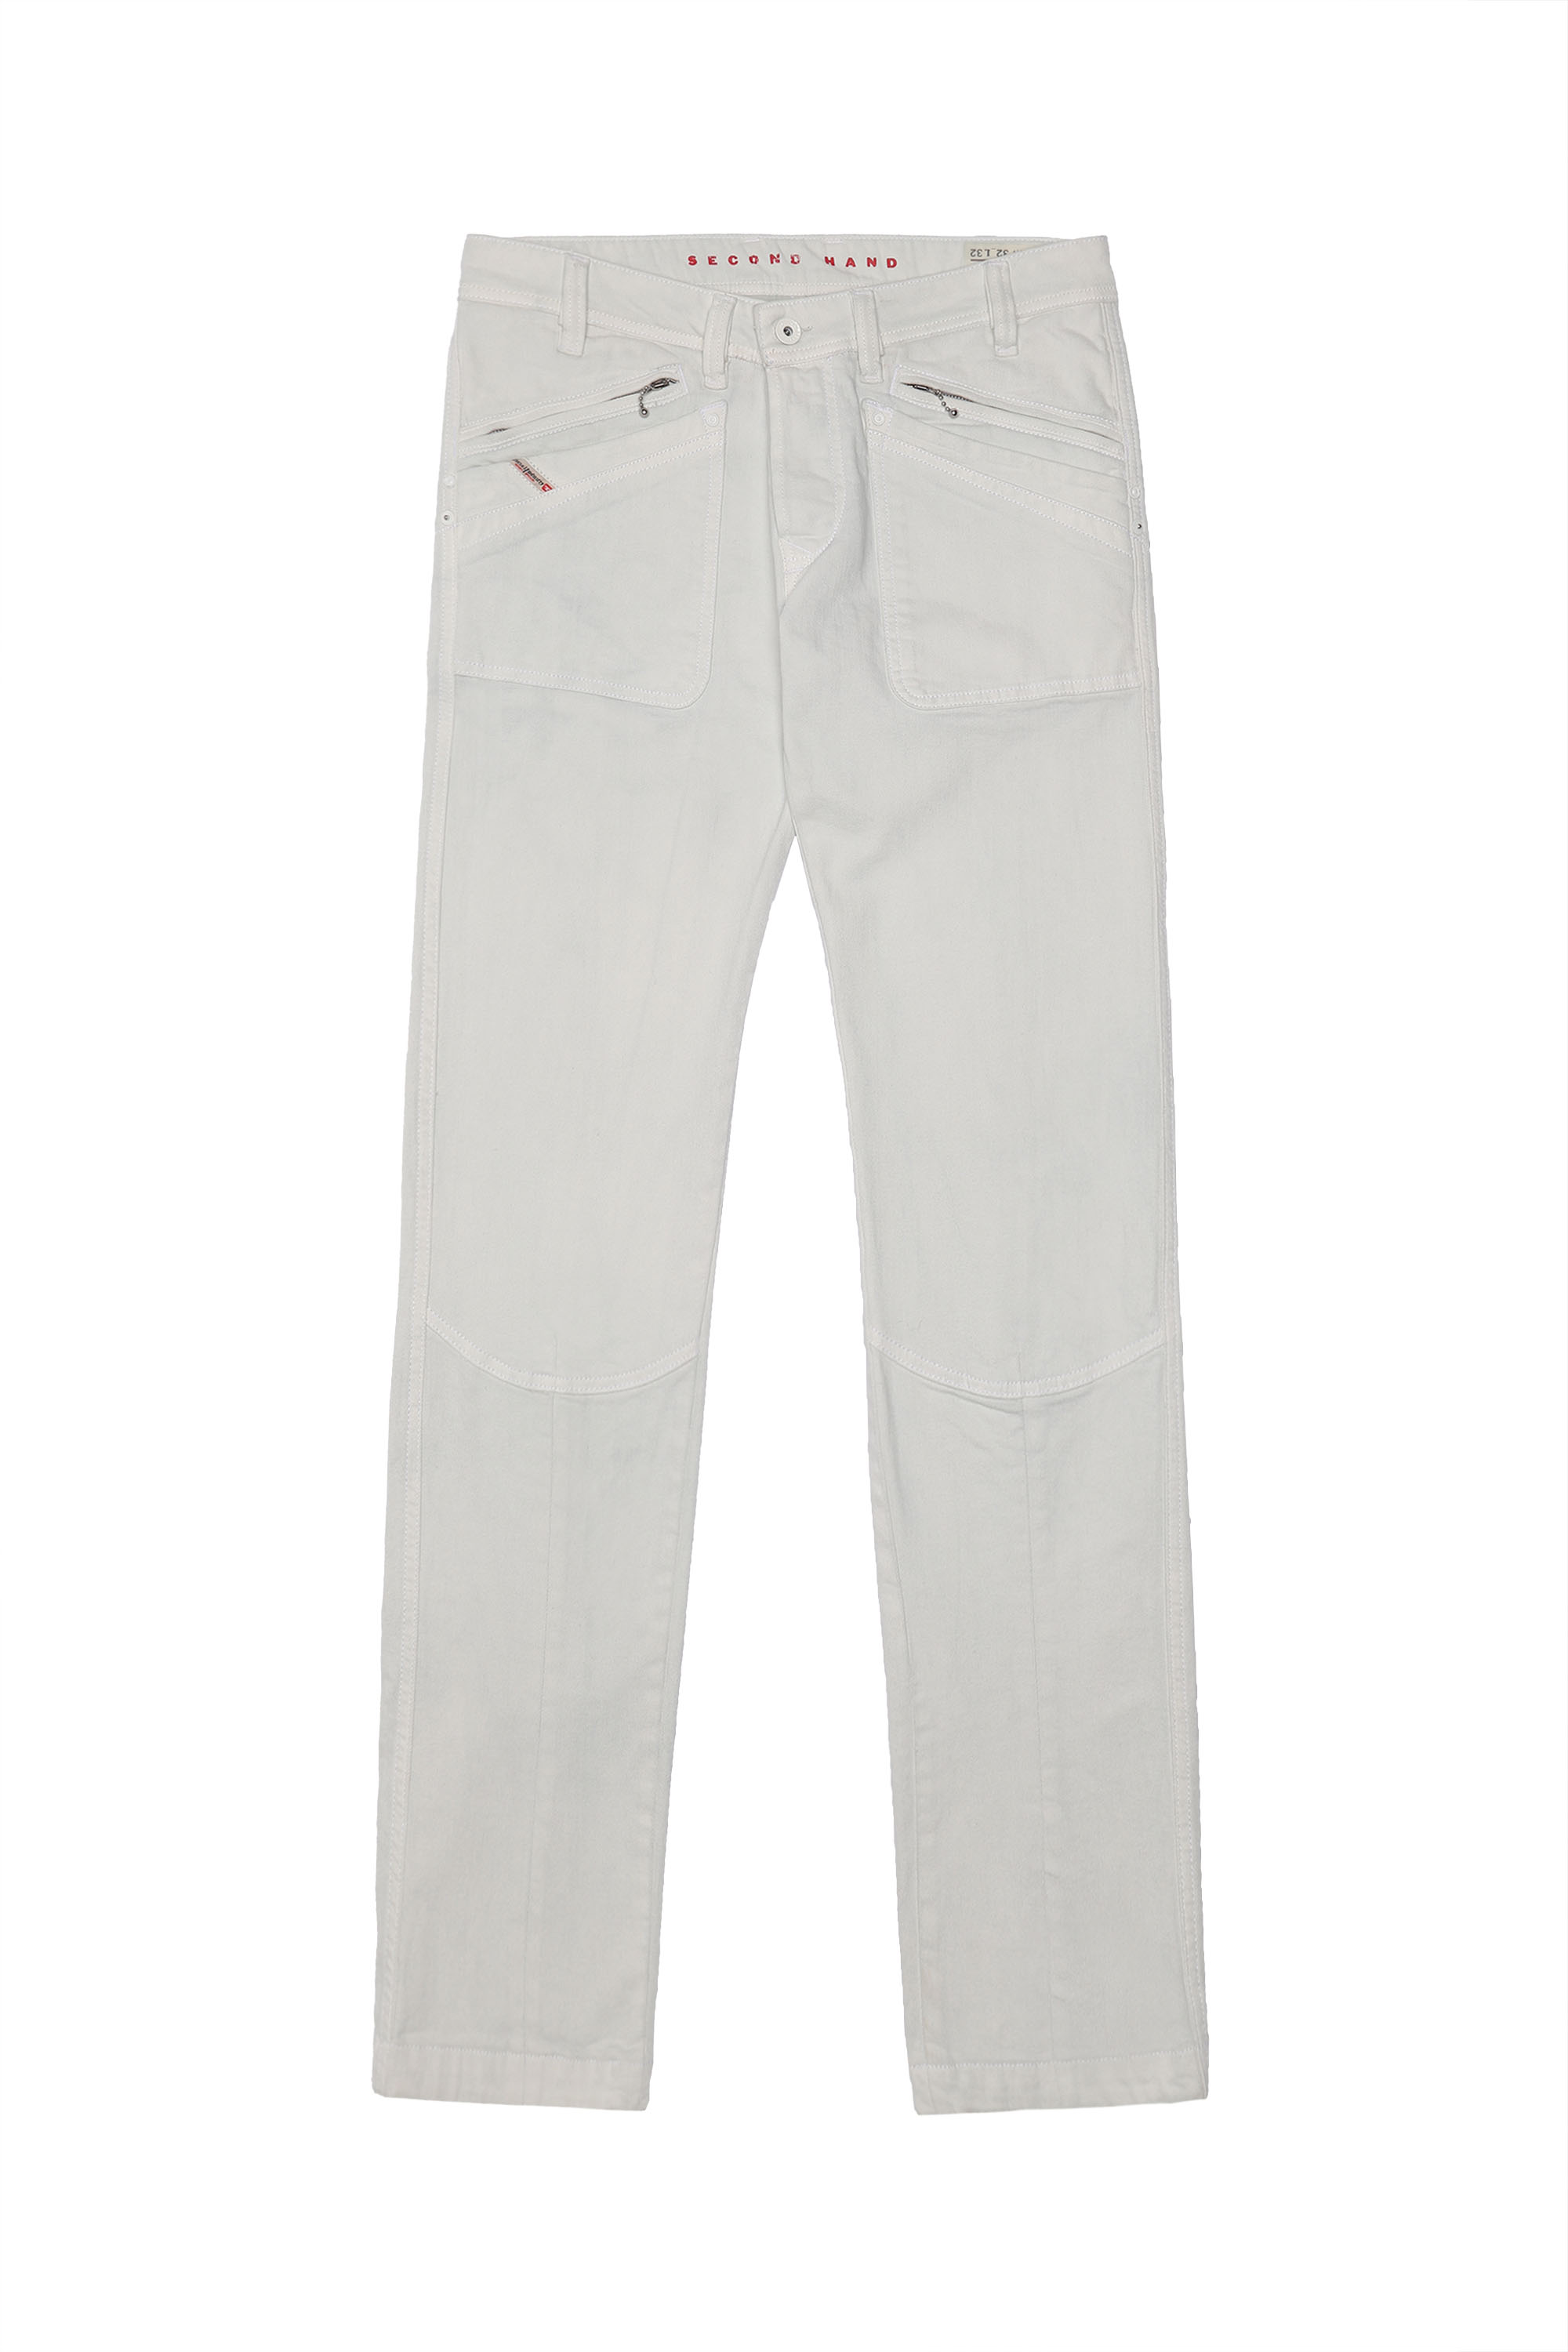 SLICKAP, White - Jeans